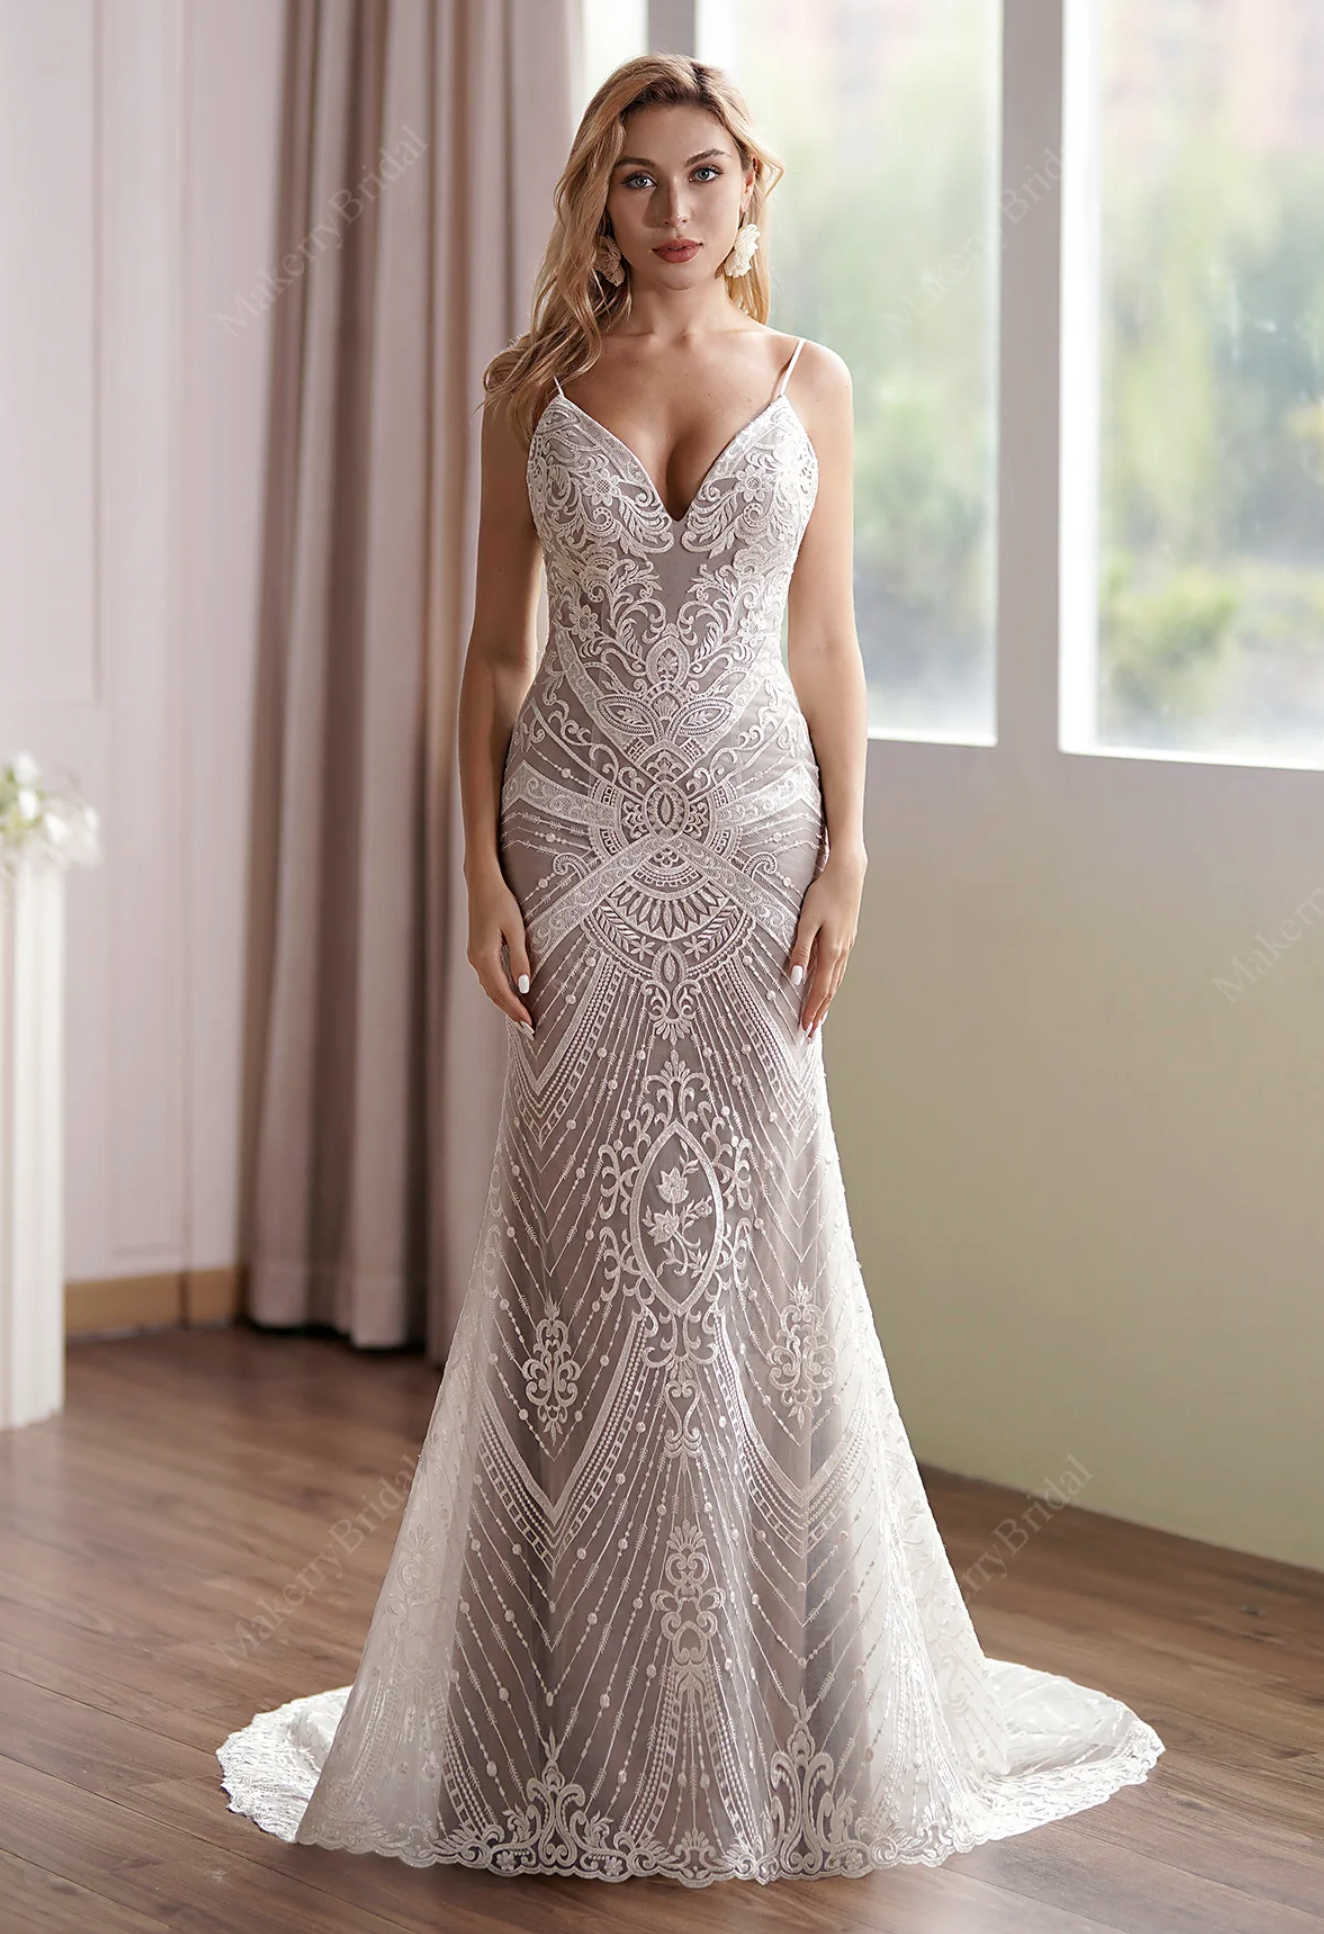 Sparkly Silver Gown, Silver Dress Silver Ballgown Wedding Gown, Modern  Evening Wear, Sparkly Ballgown, Custom Made 